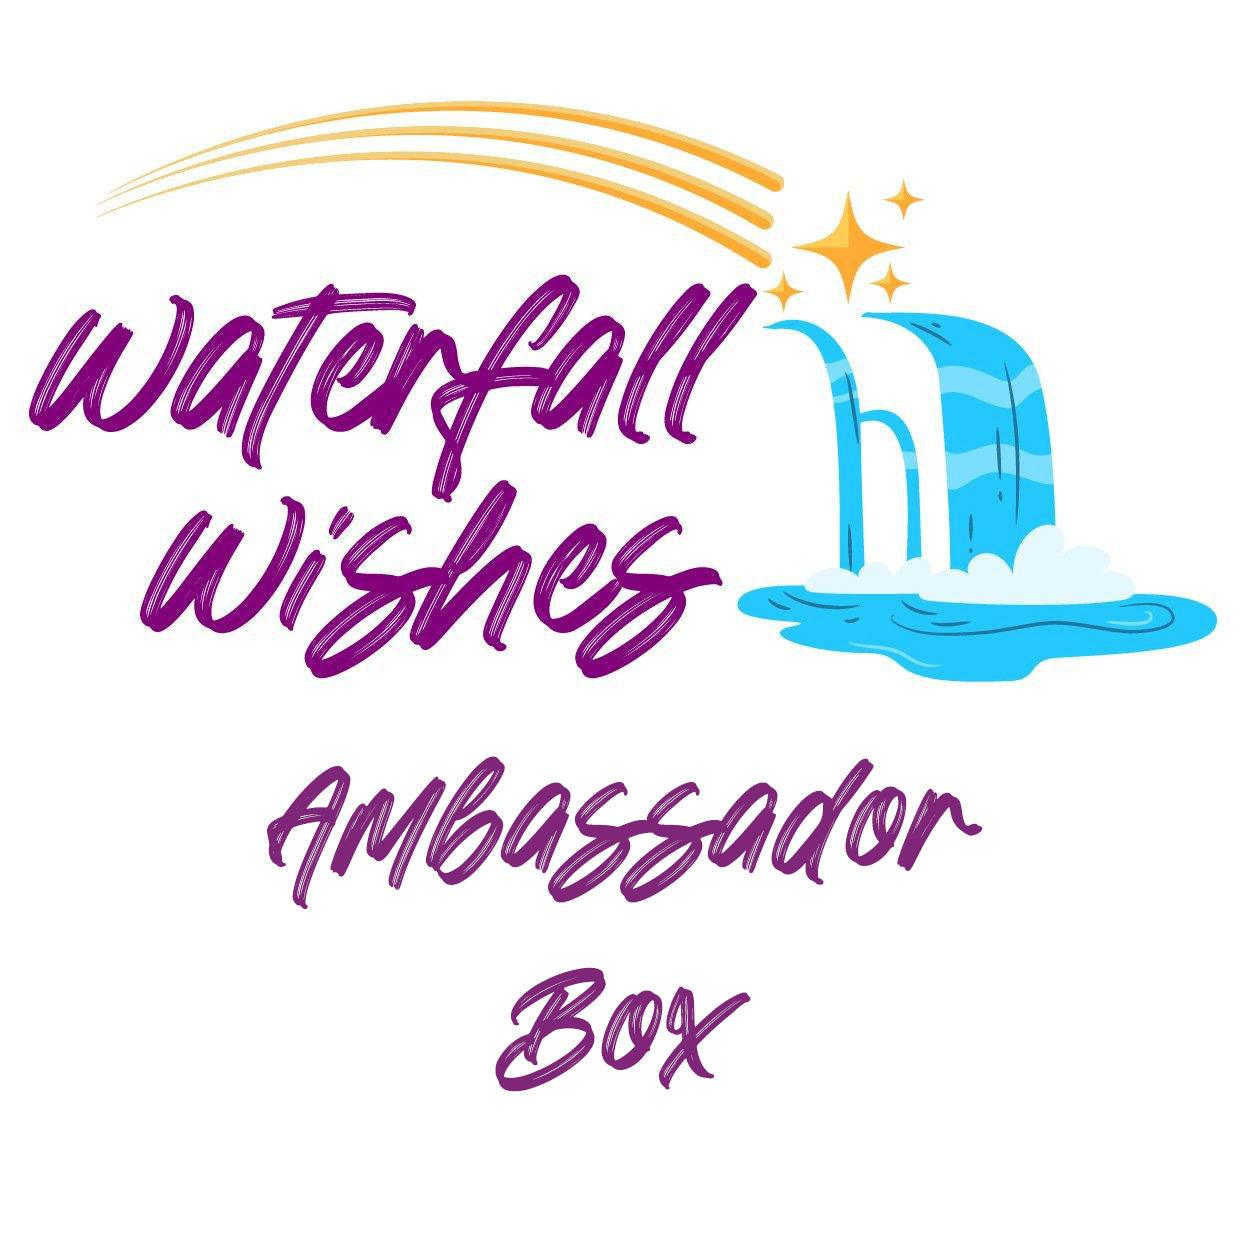 Ambassador Box - Waterfall Wishes